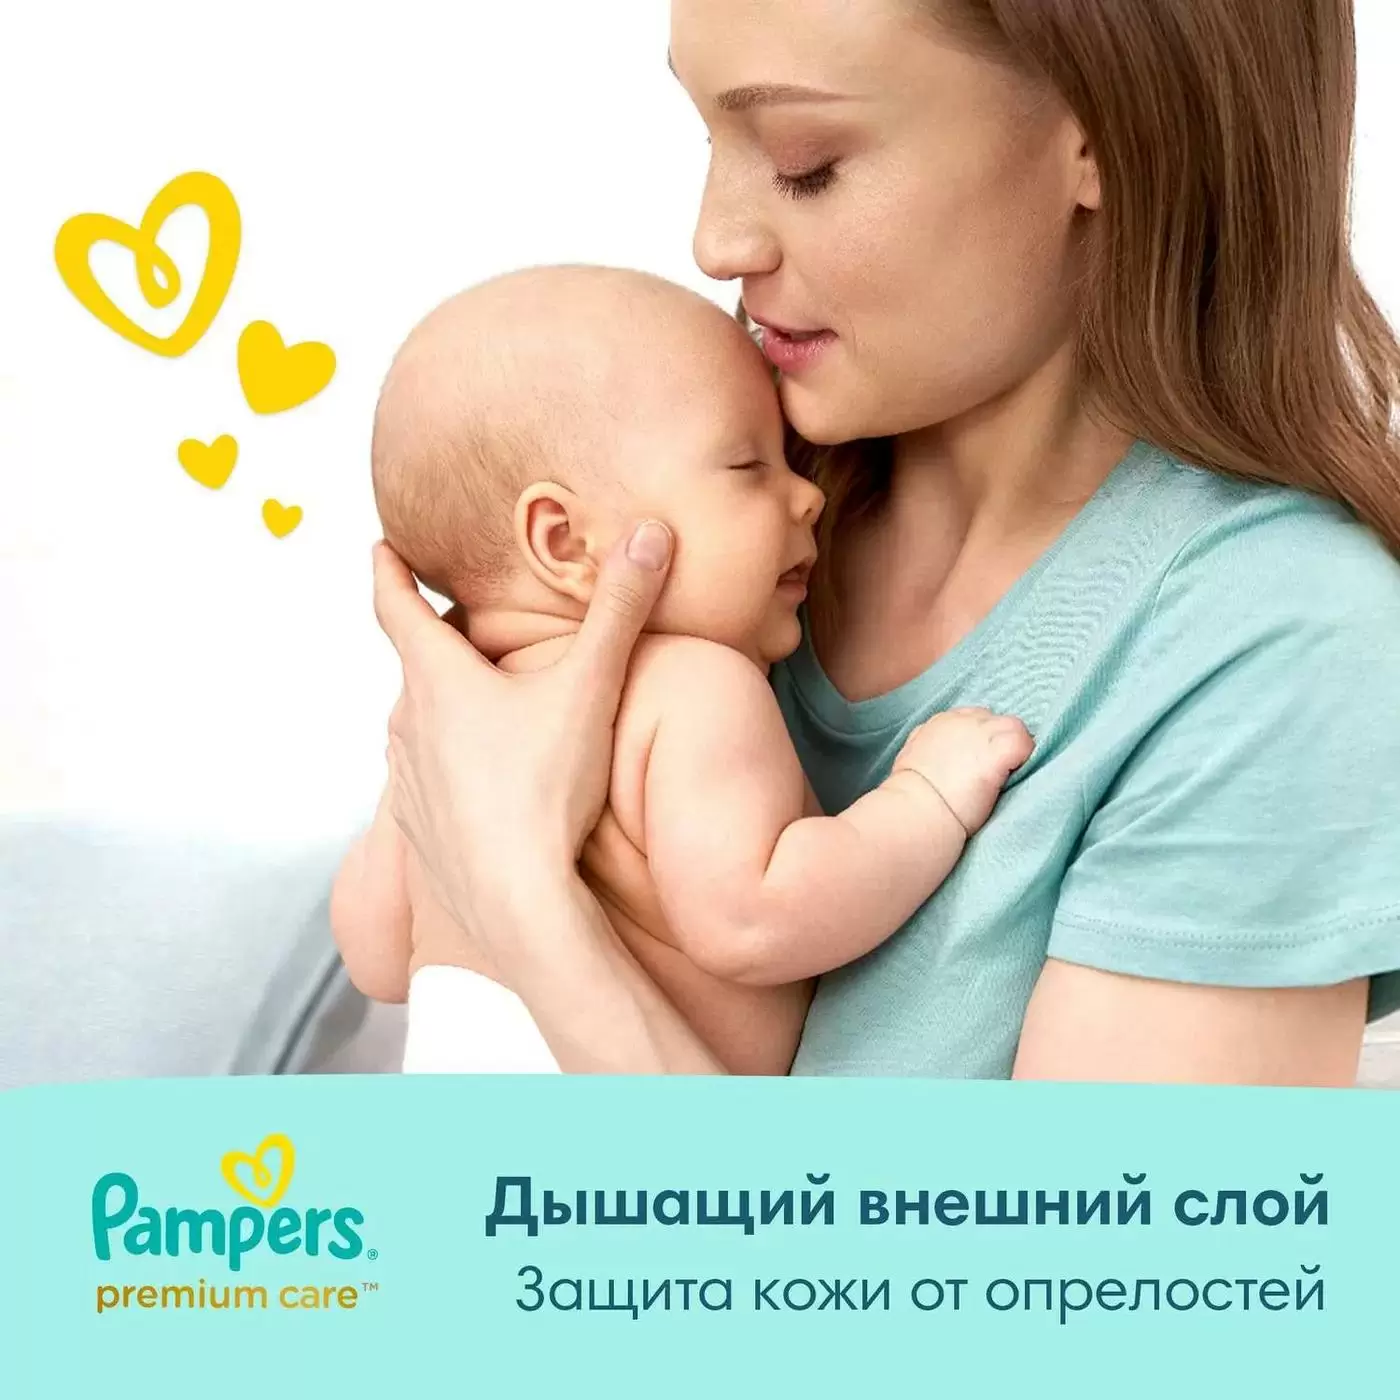 Подгузники PAMPERS Premium Care Newborn (1,5-2,5кг) 22шт